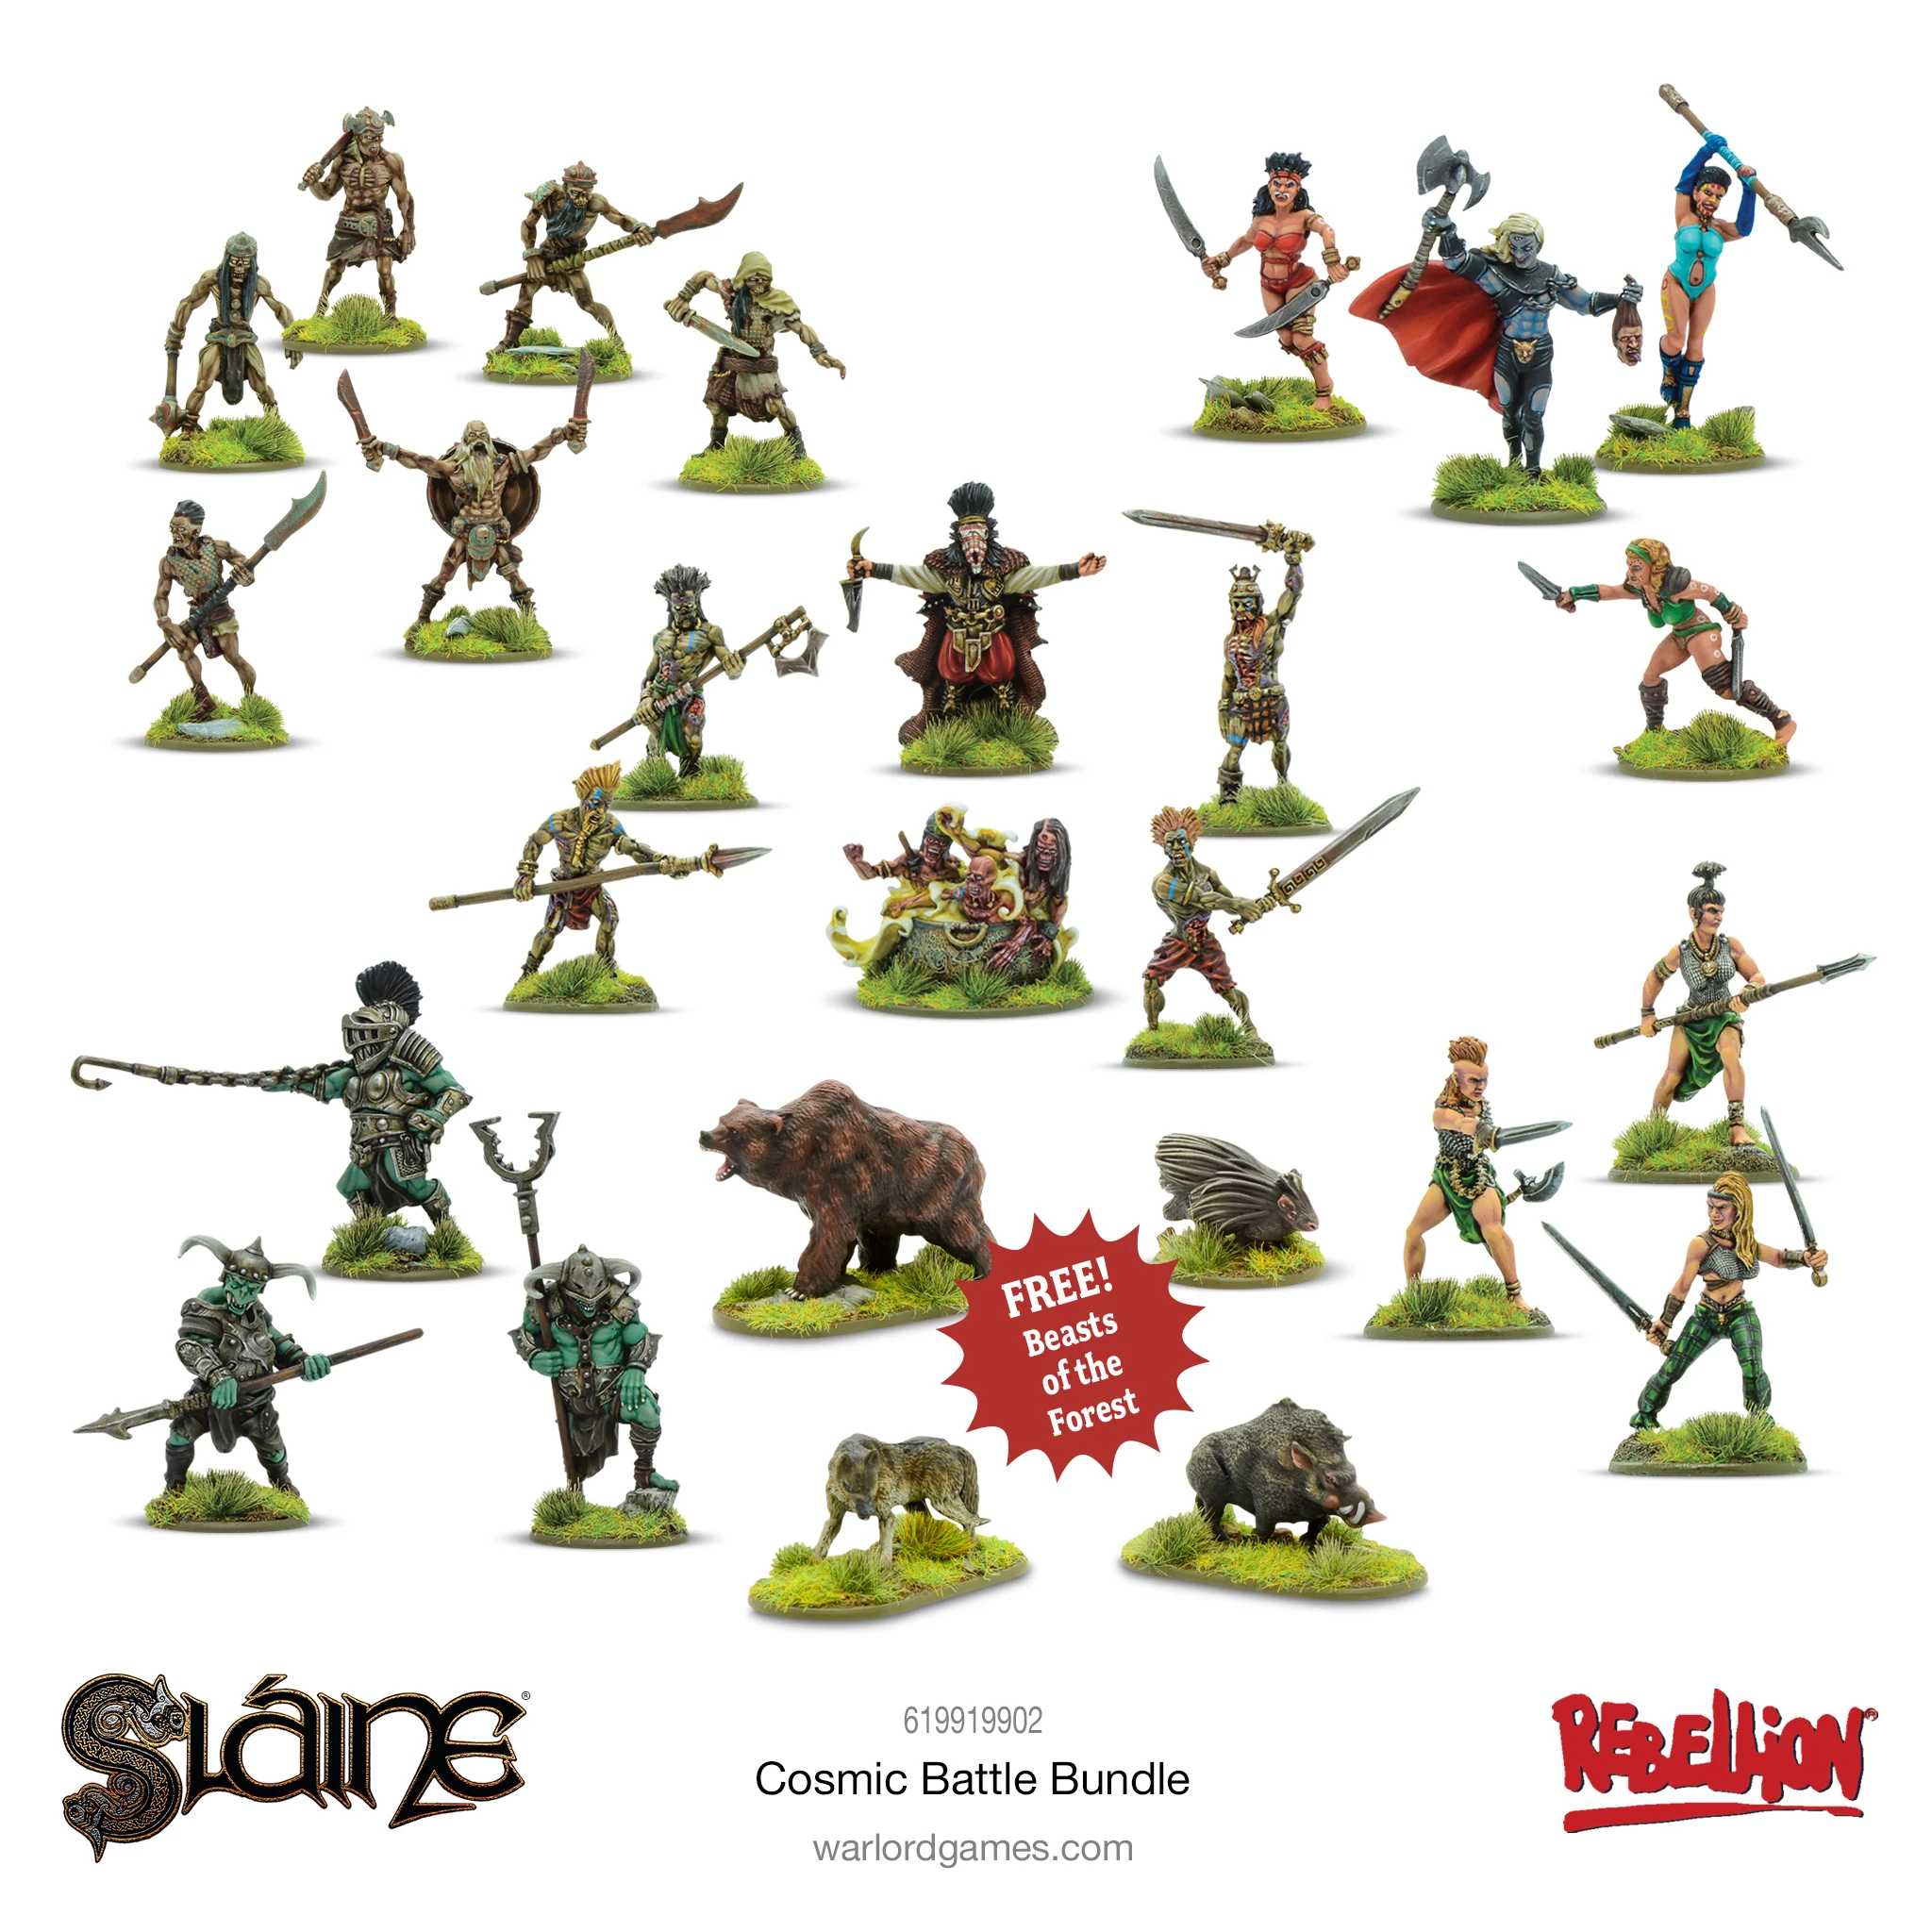 Slaine the Miniatures Game Cosmic Battle Bundle